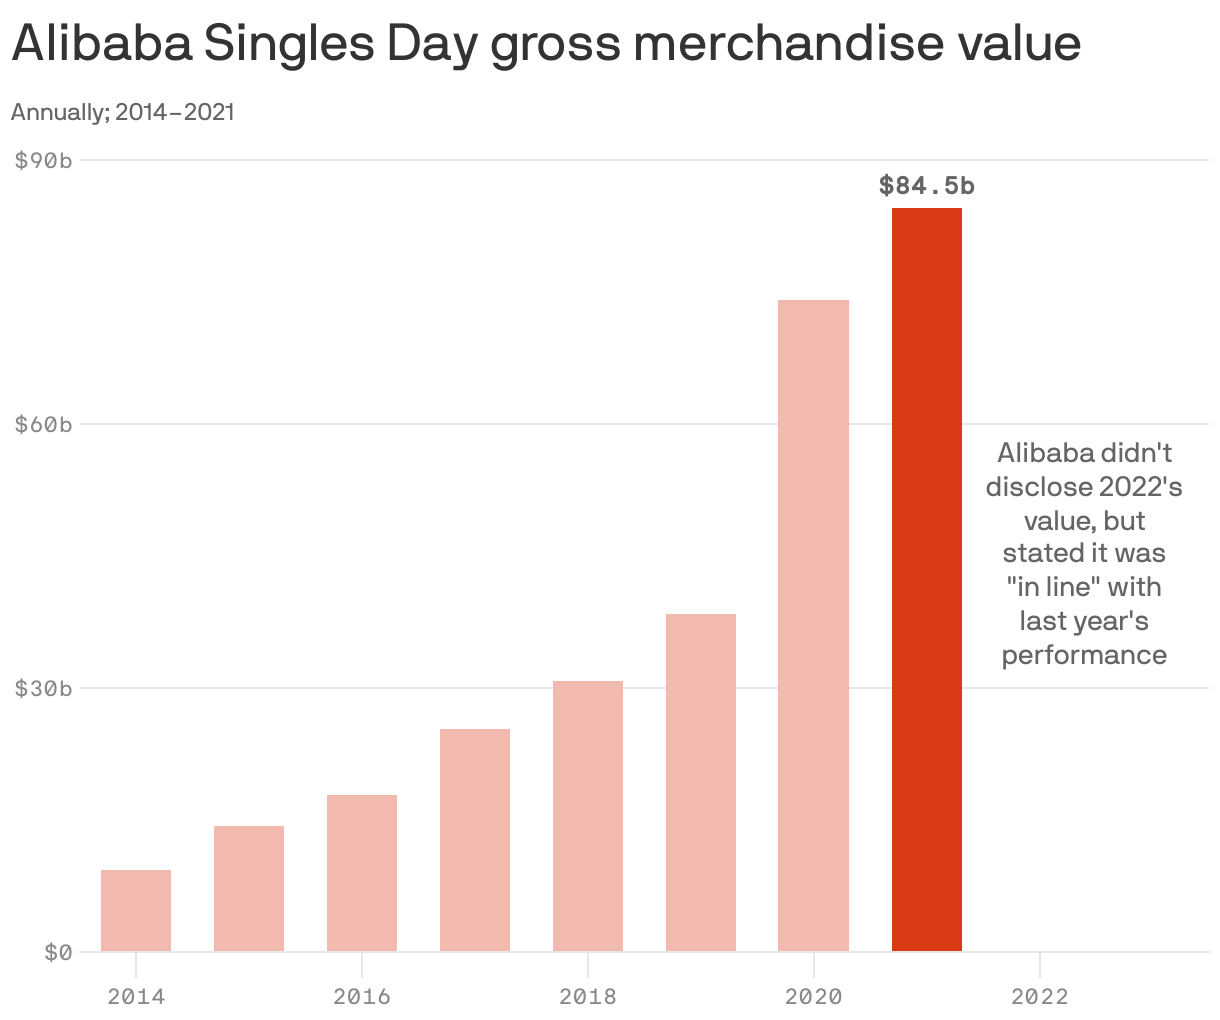 Alibaba Singles Day gross merchandise value